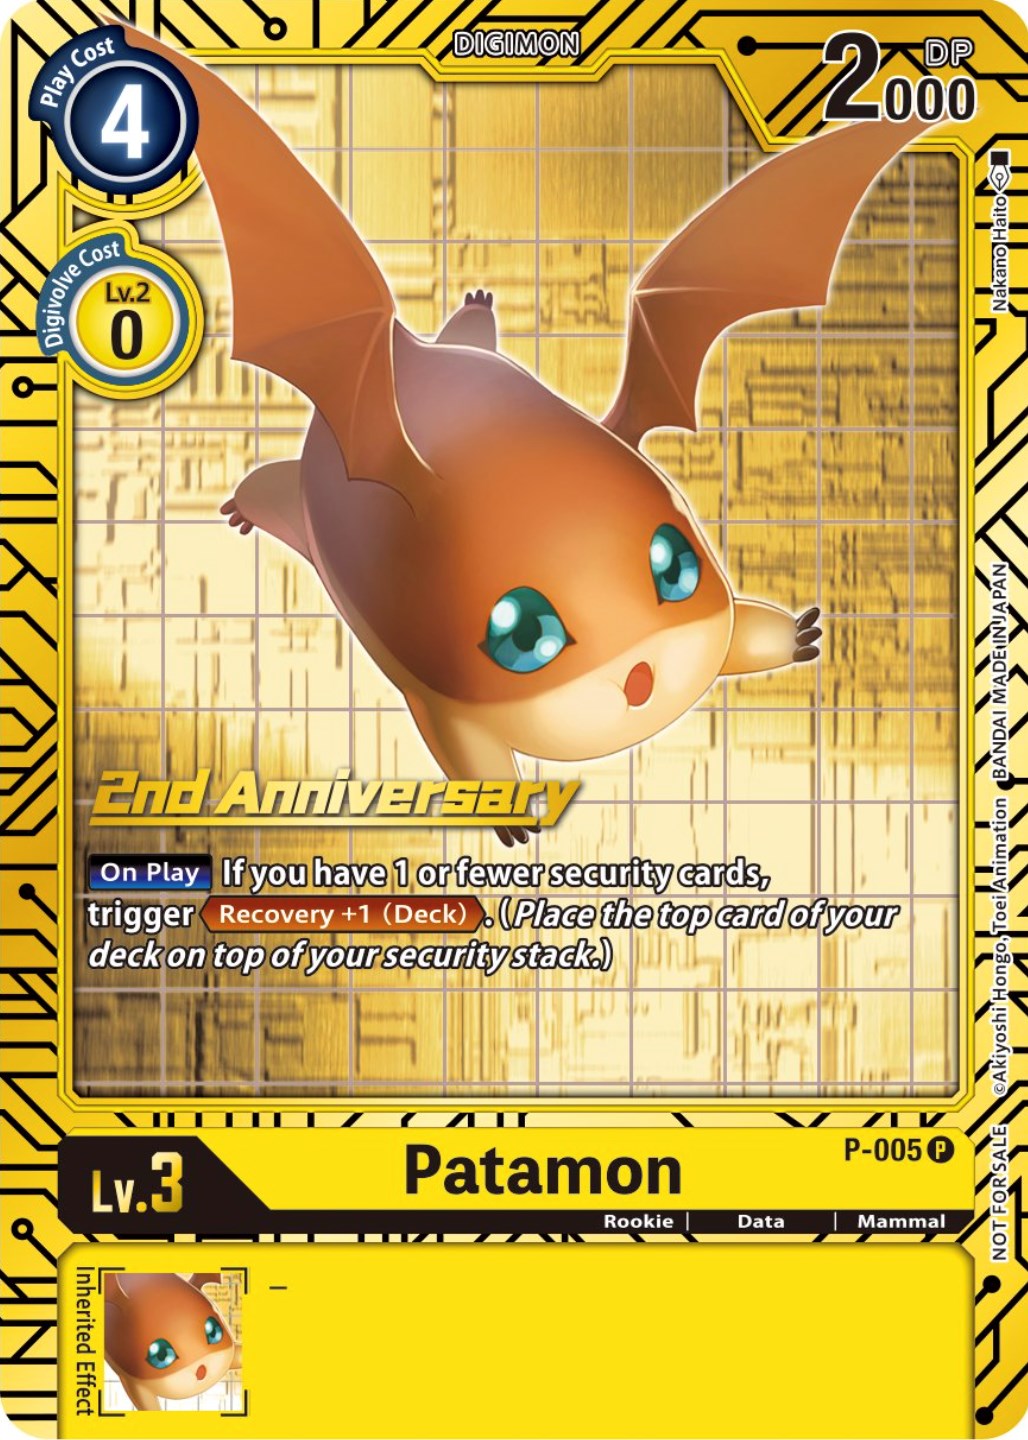 Patamon [P-005] (2nd Anniversary Card Set) [Promotional Cards] | Devastation Store